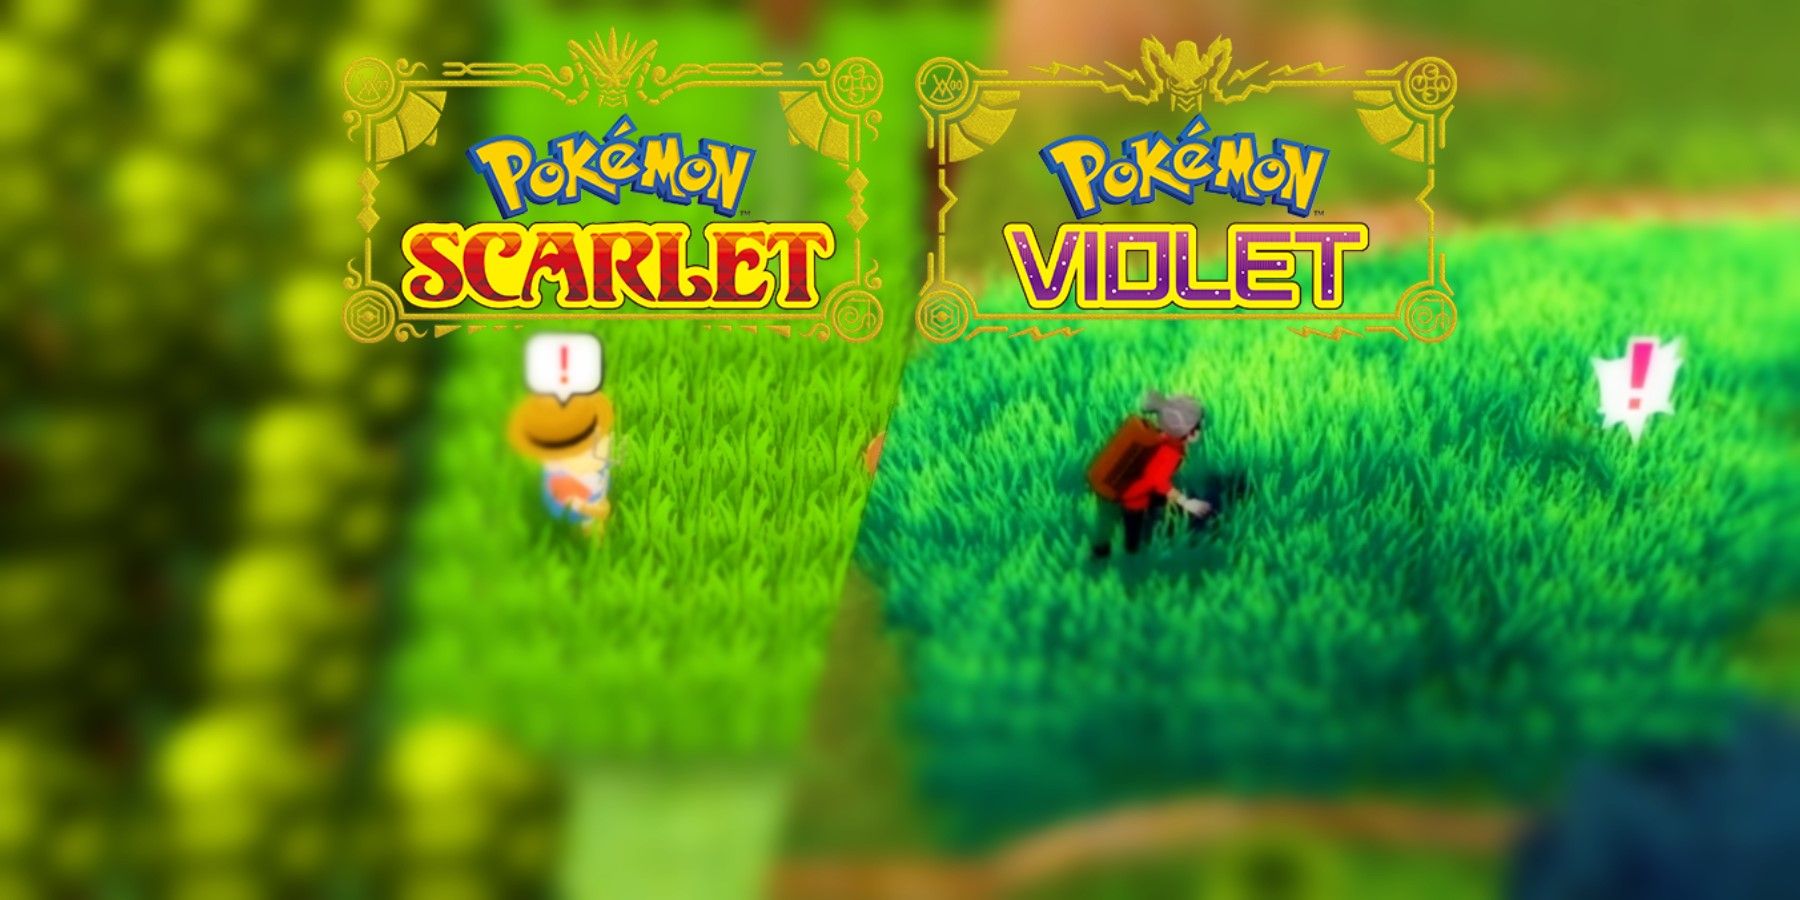 pokemon scarlet violet tall grass random encounters trainer battles ai line of sight